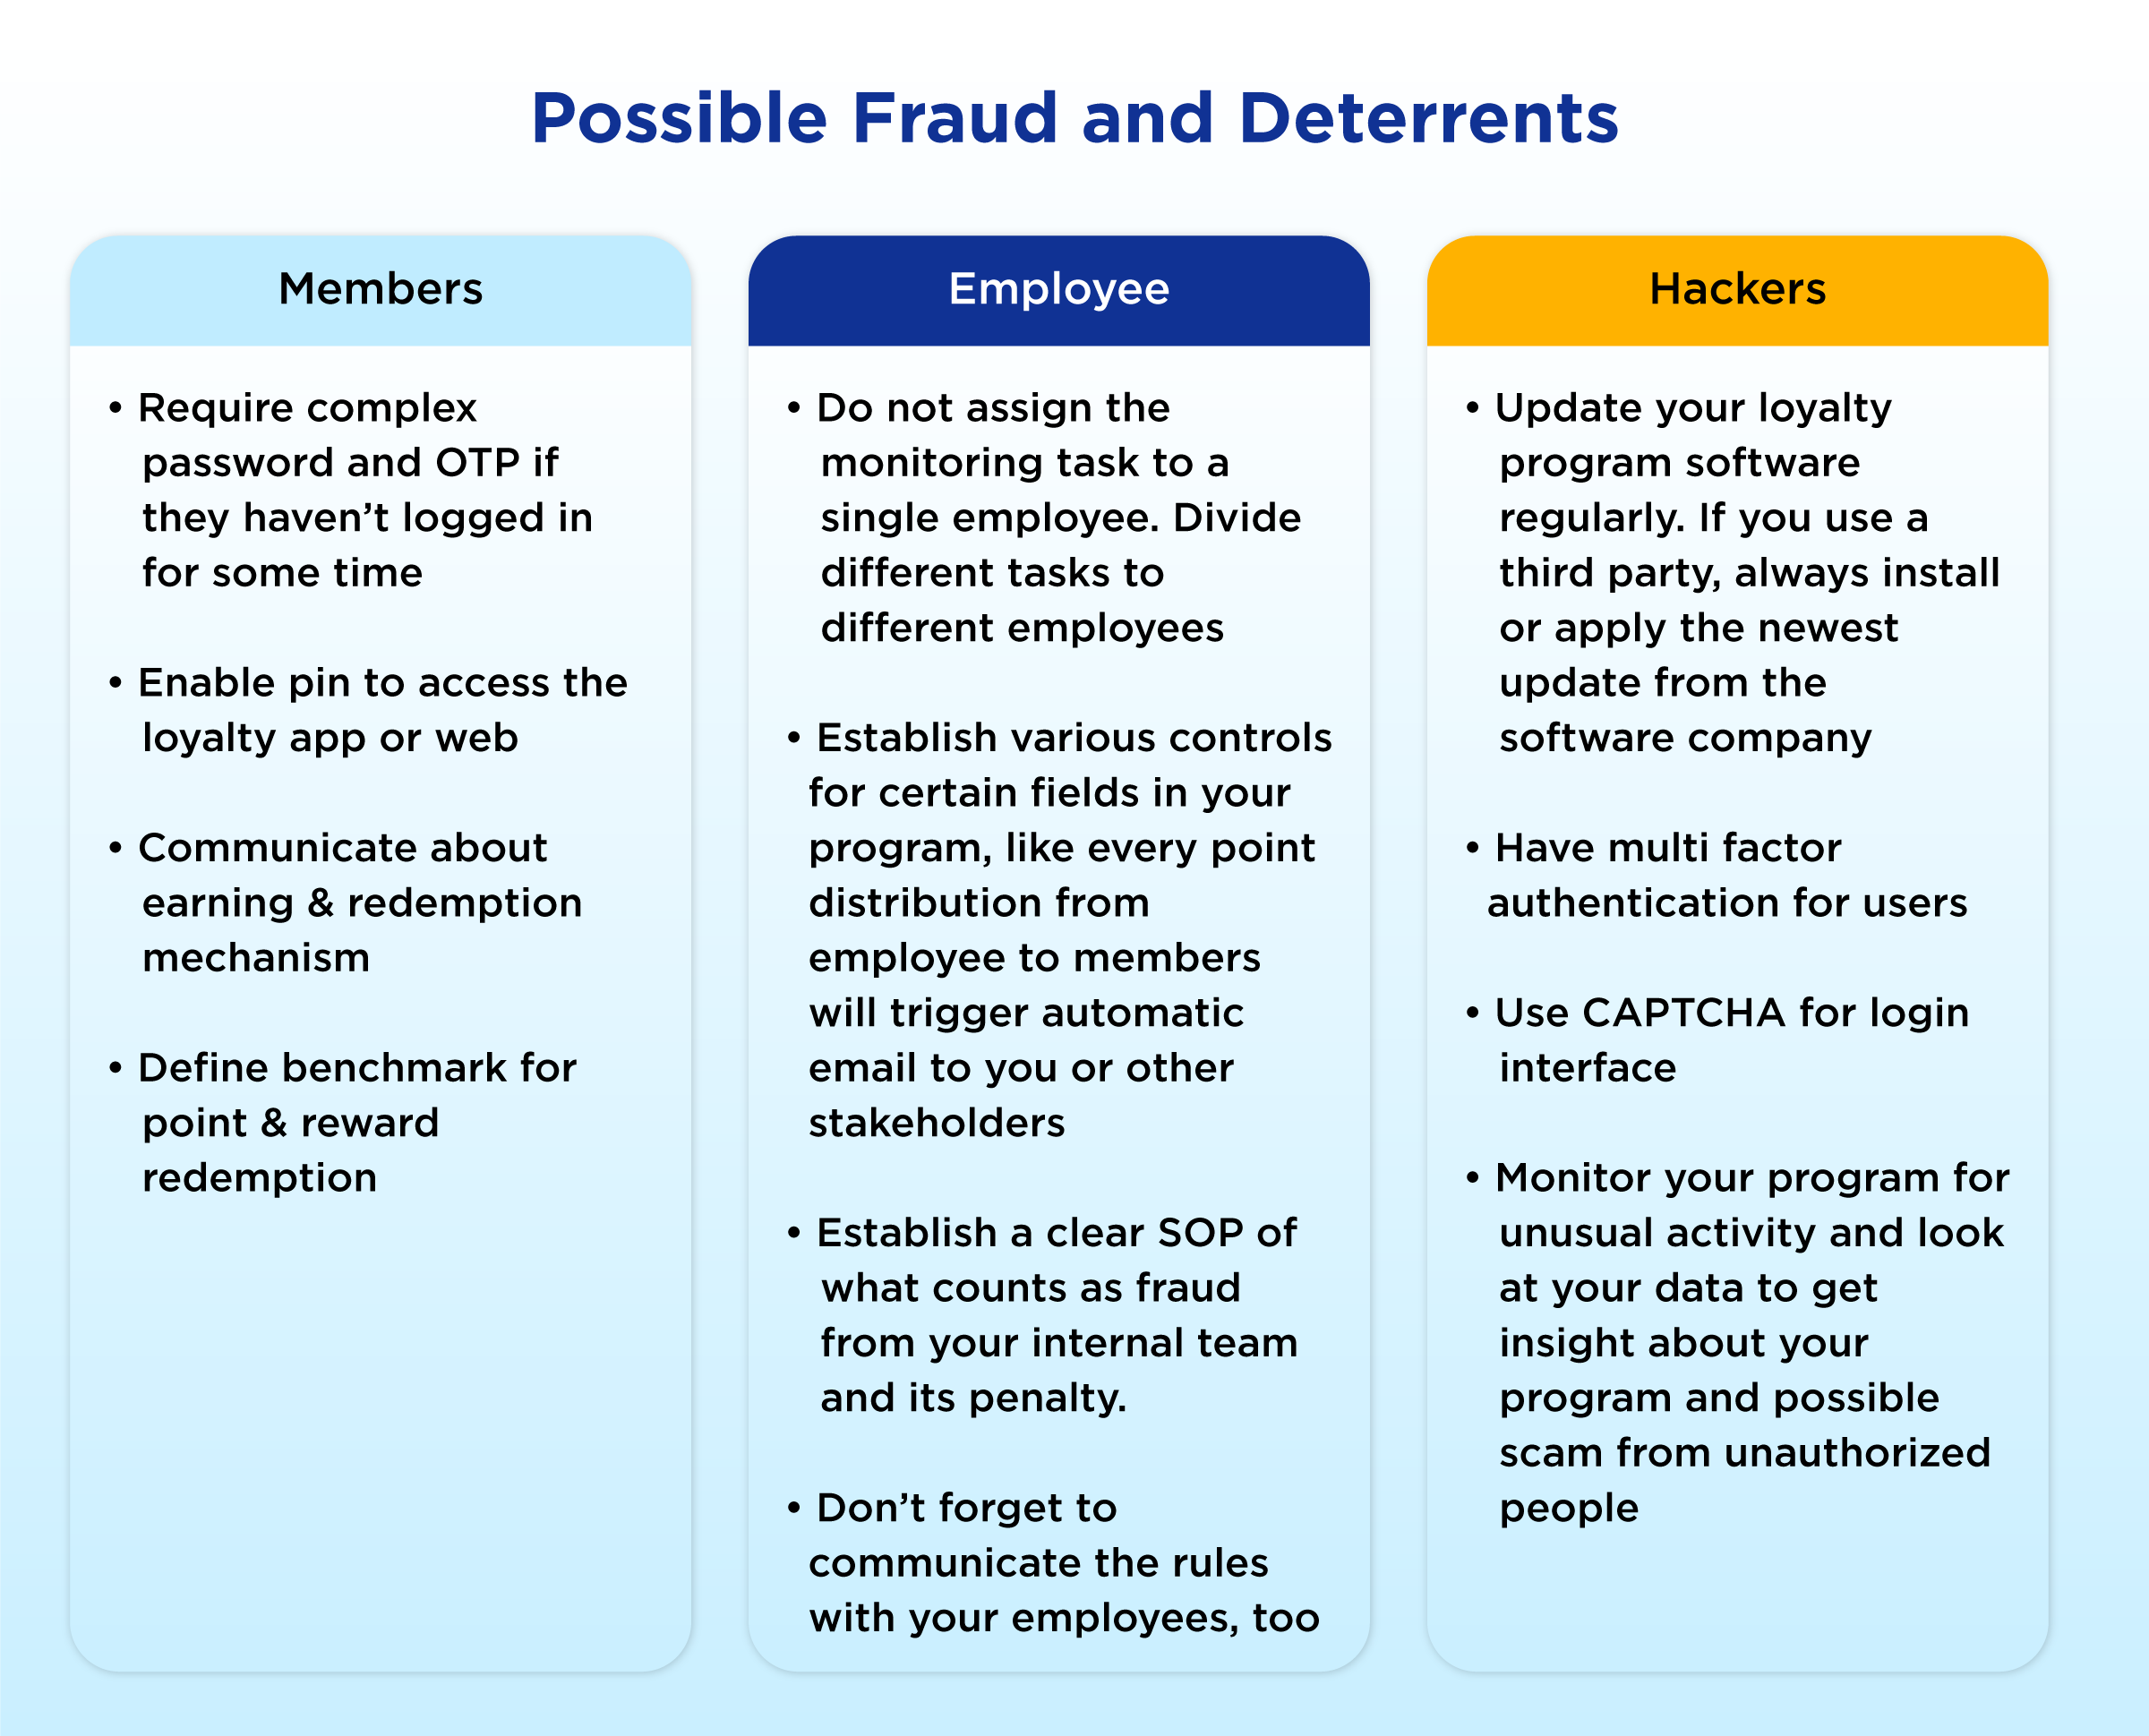 customer-oyalty-program-fraud (2)